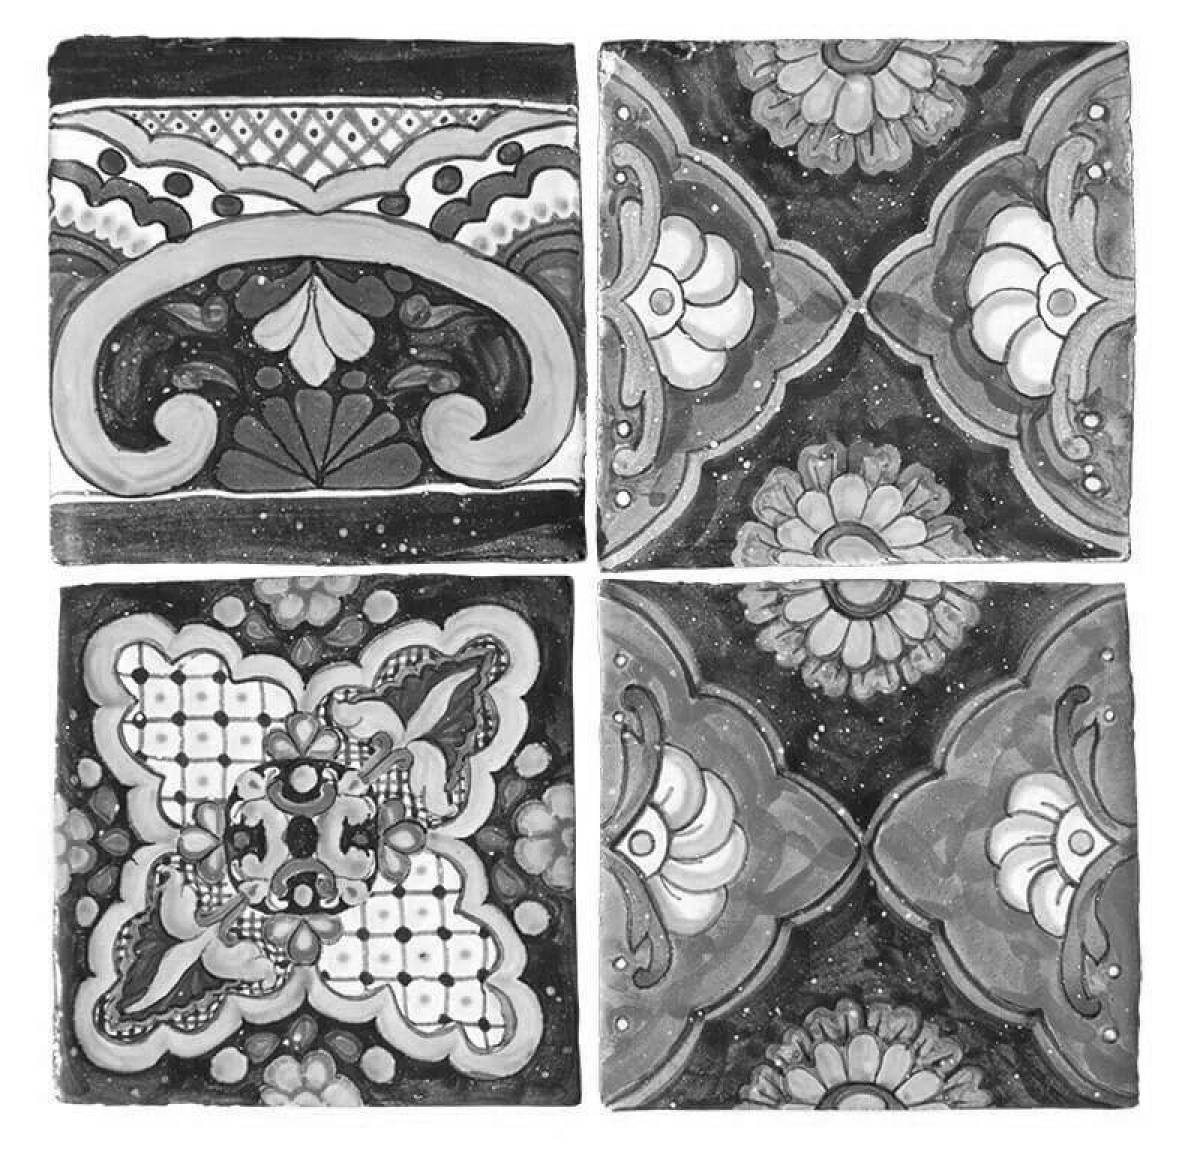 Charming ceramic tiles coloring book